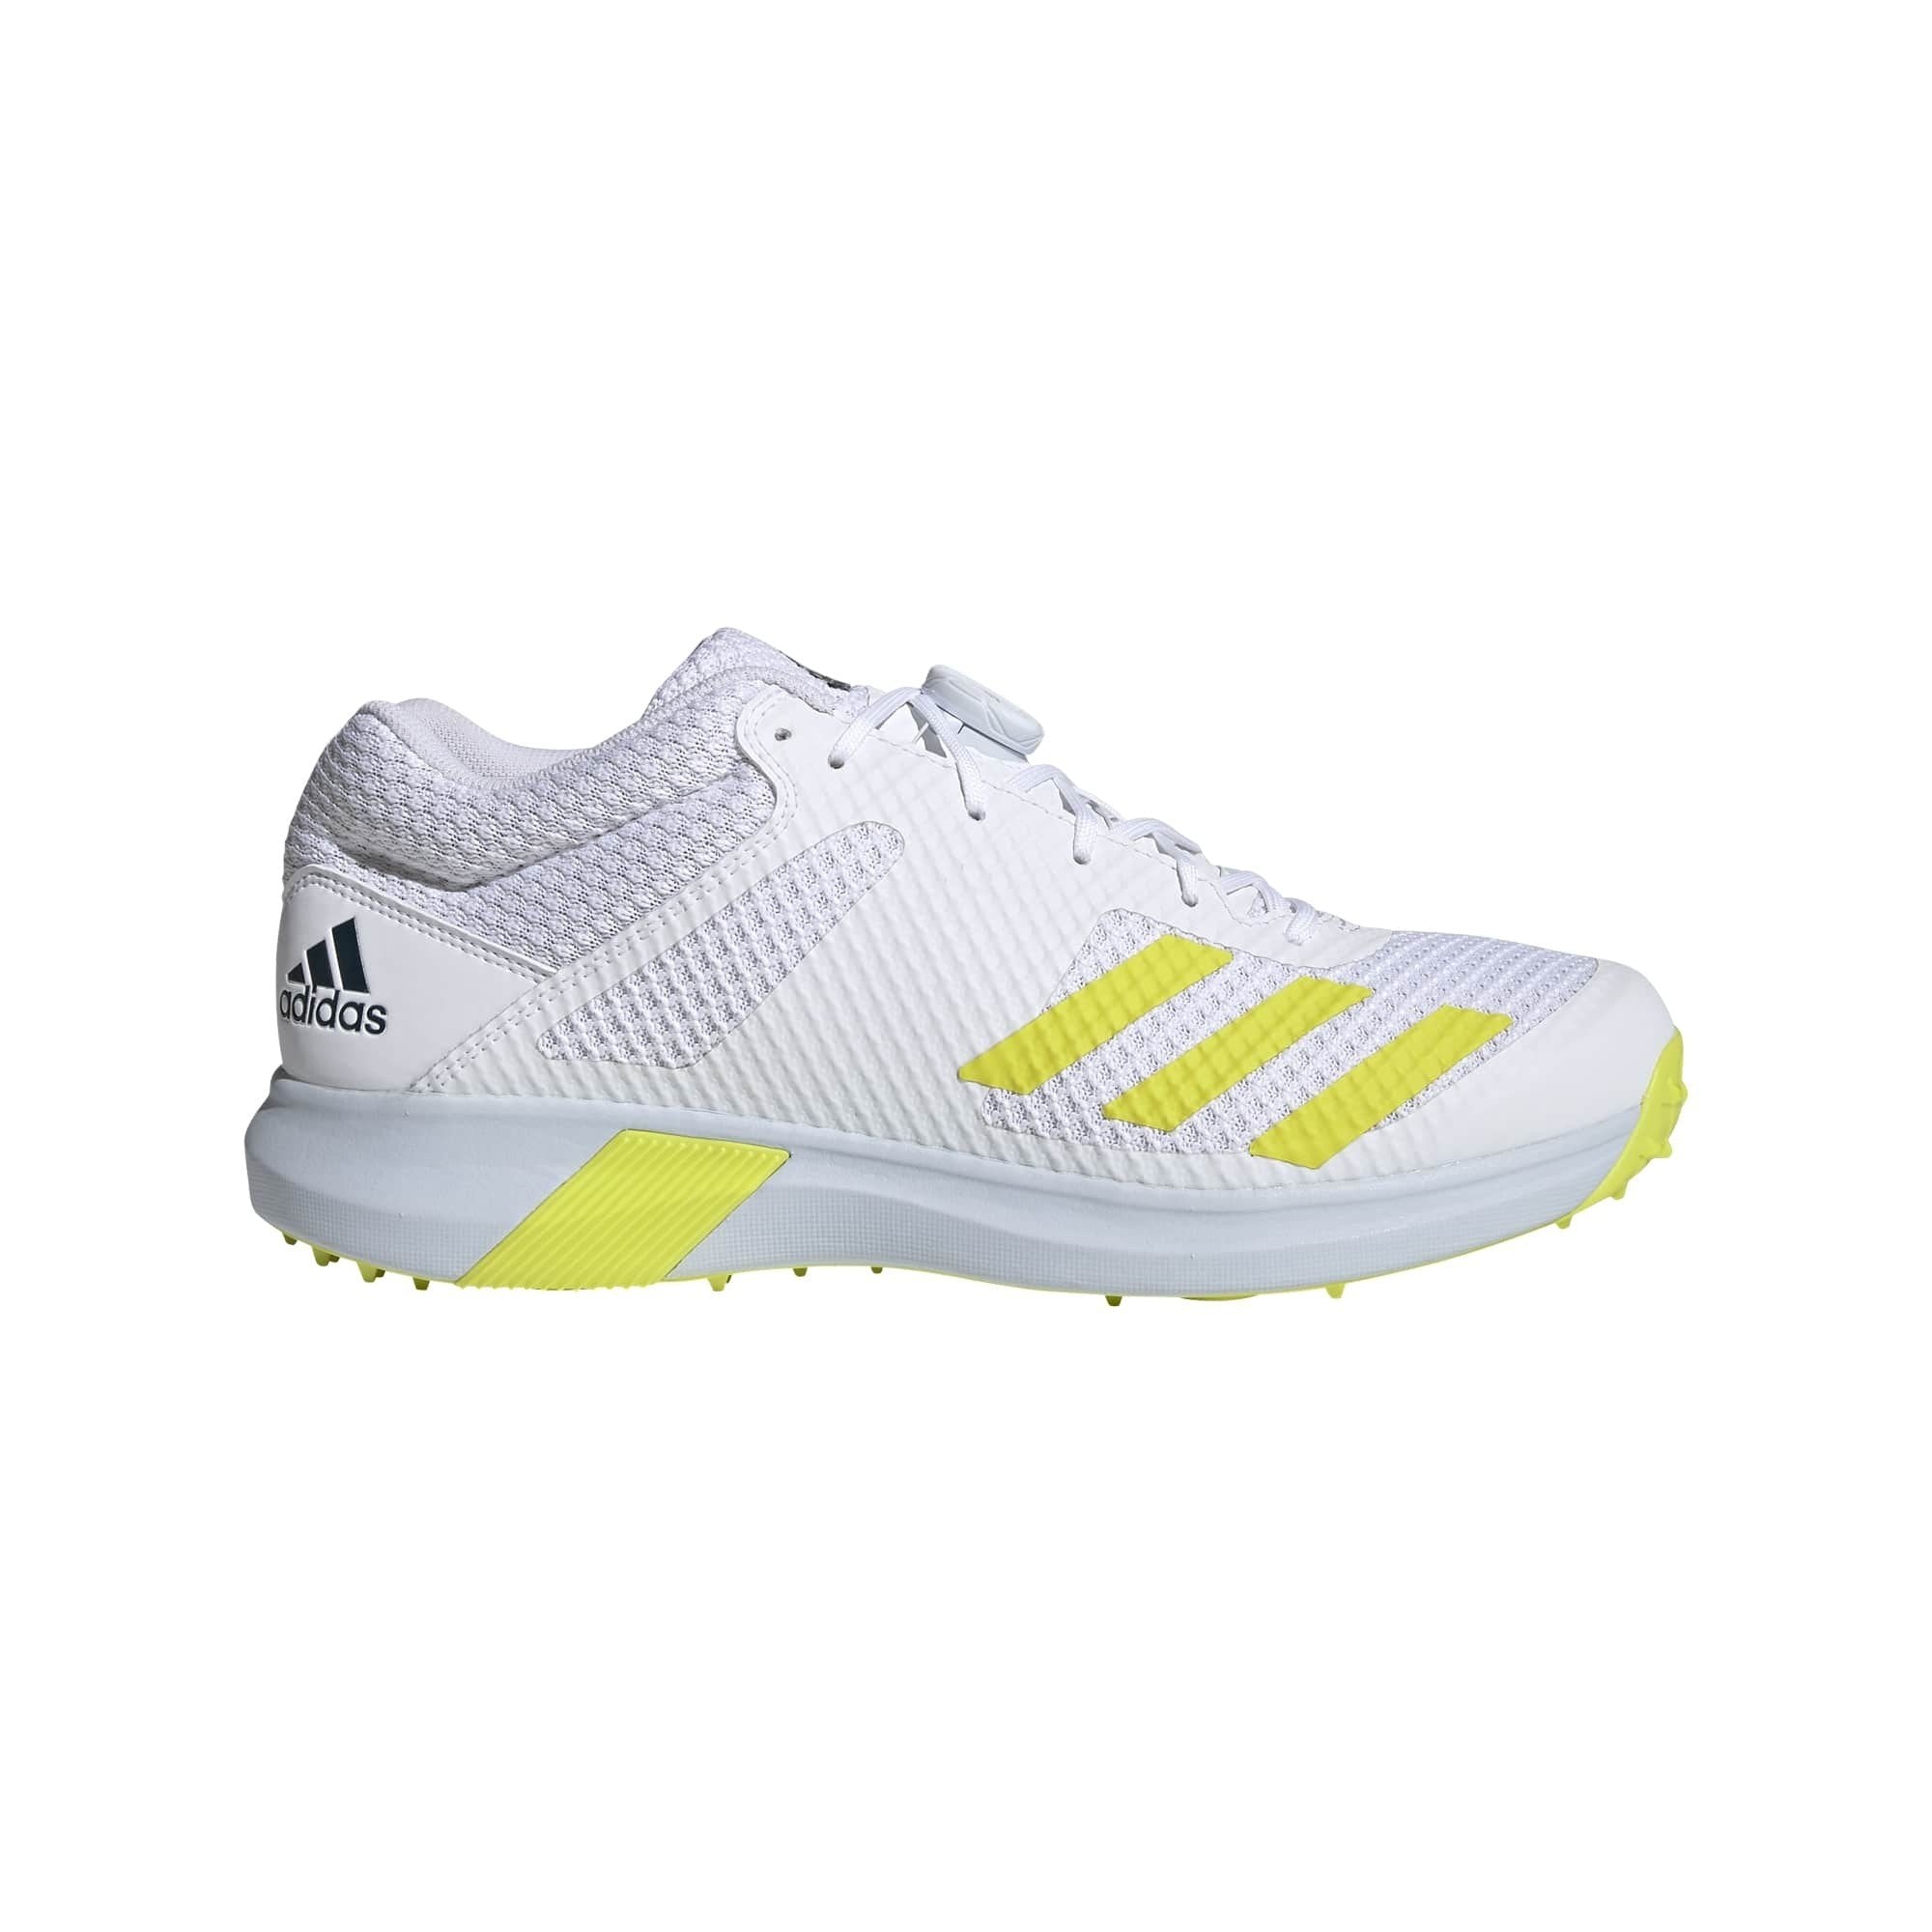 Adidas AdiPower Vector Midbowling Cricket Shoes